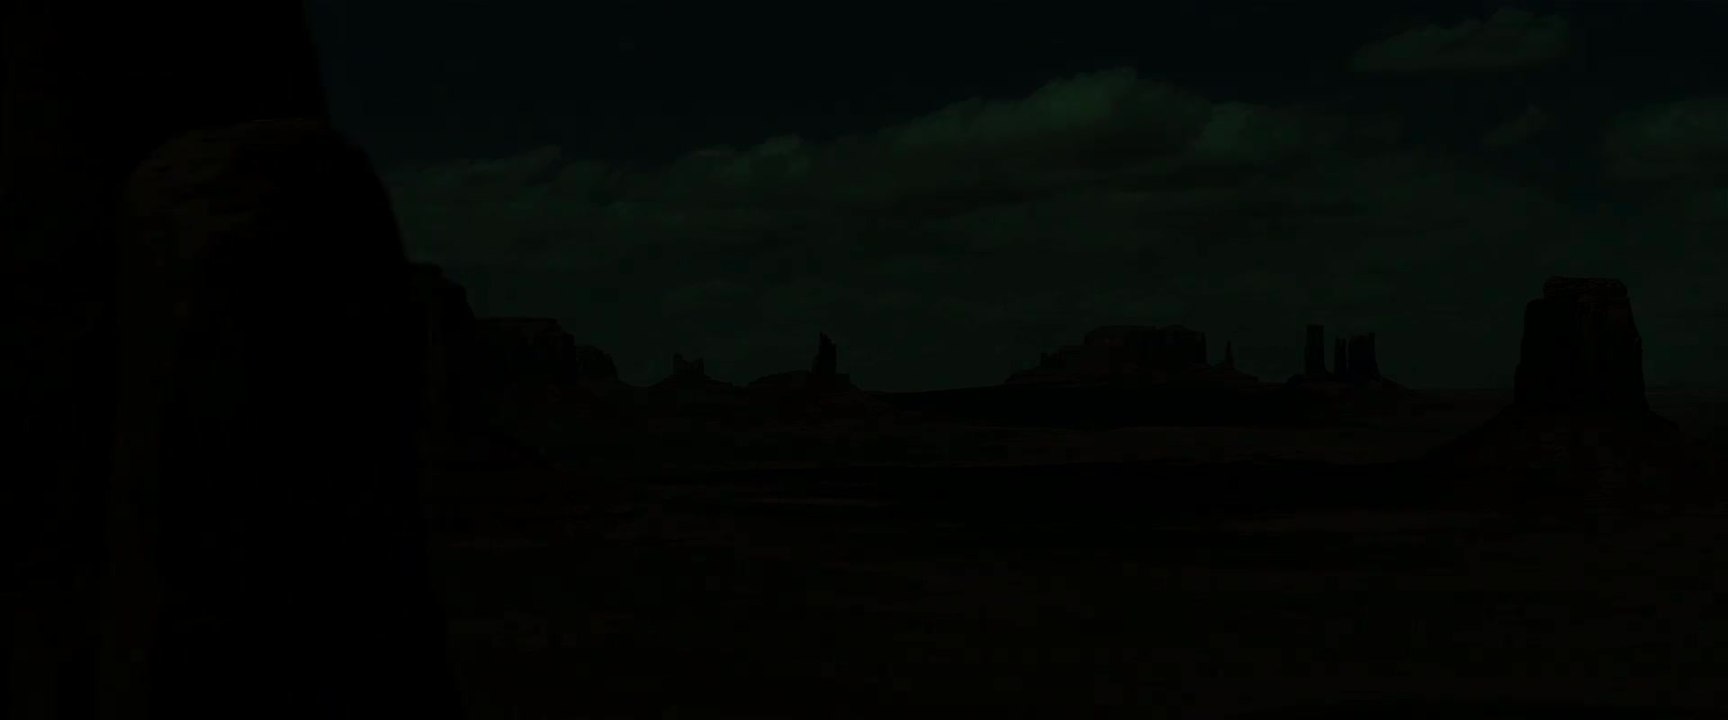 The Lone Ranger - Extended Super Bowl Trailer (Deutsch) HD